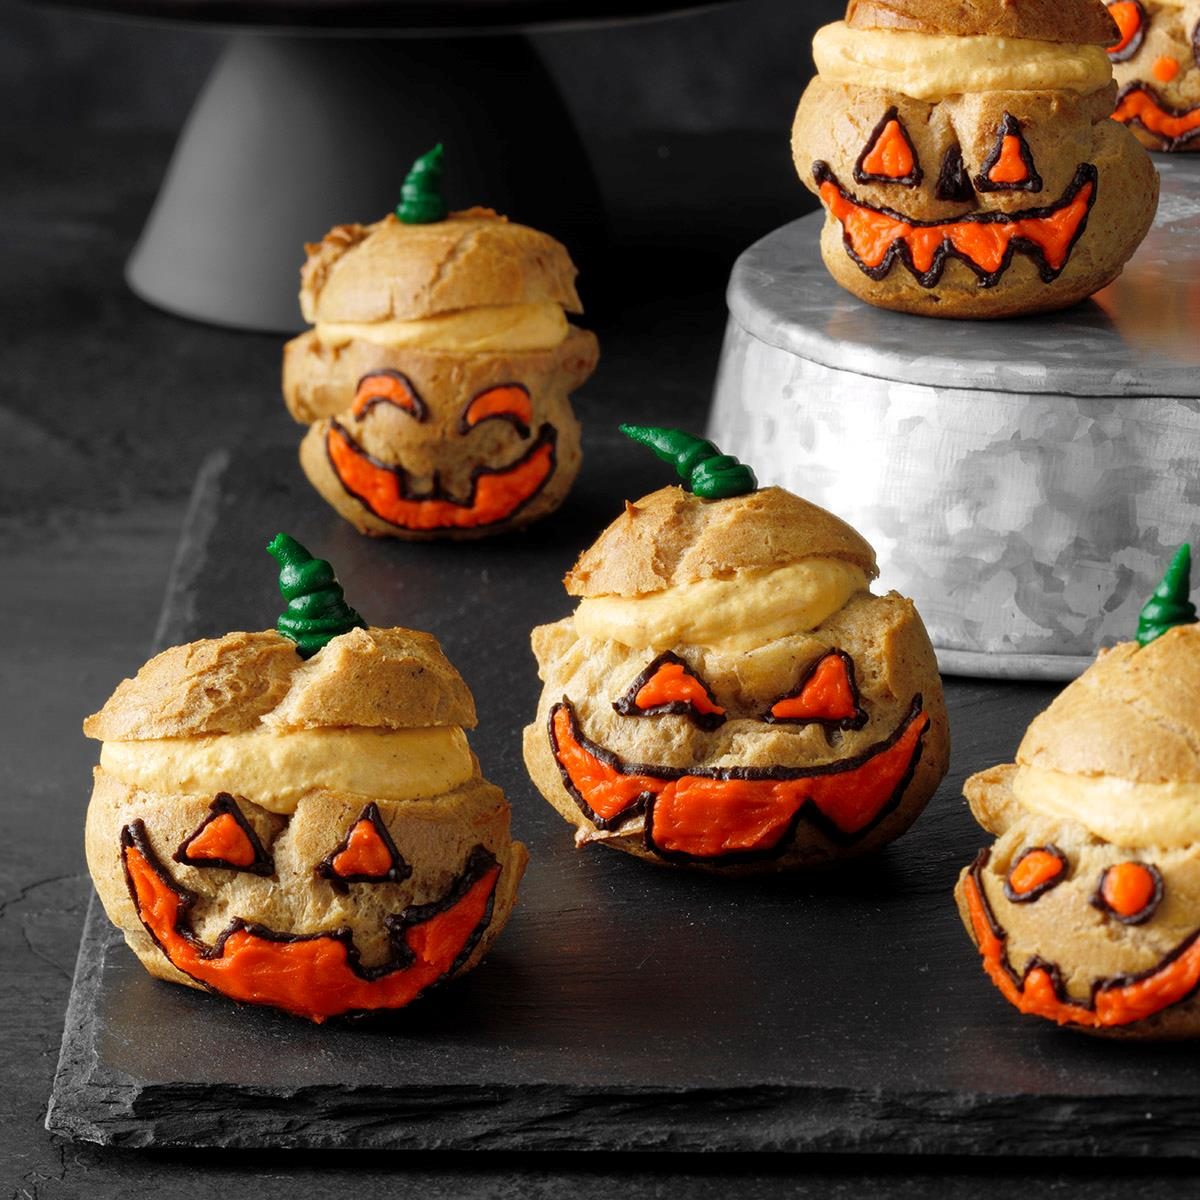 Death-Inspired Baking Pans : Creative Halloween Treats